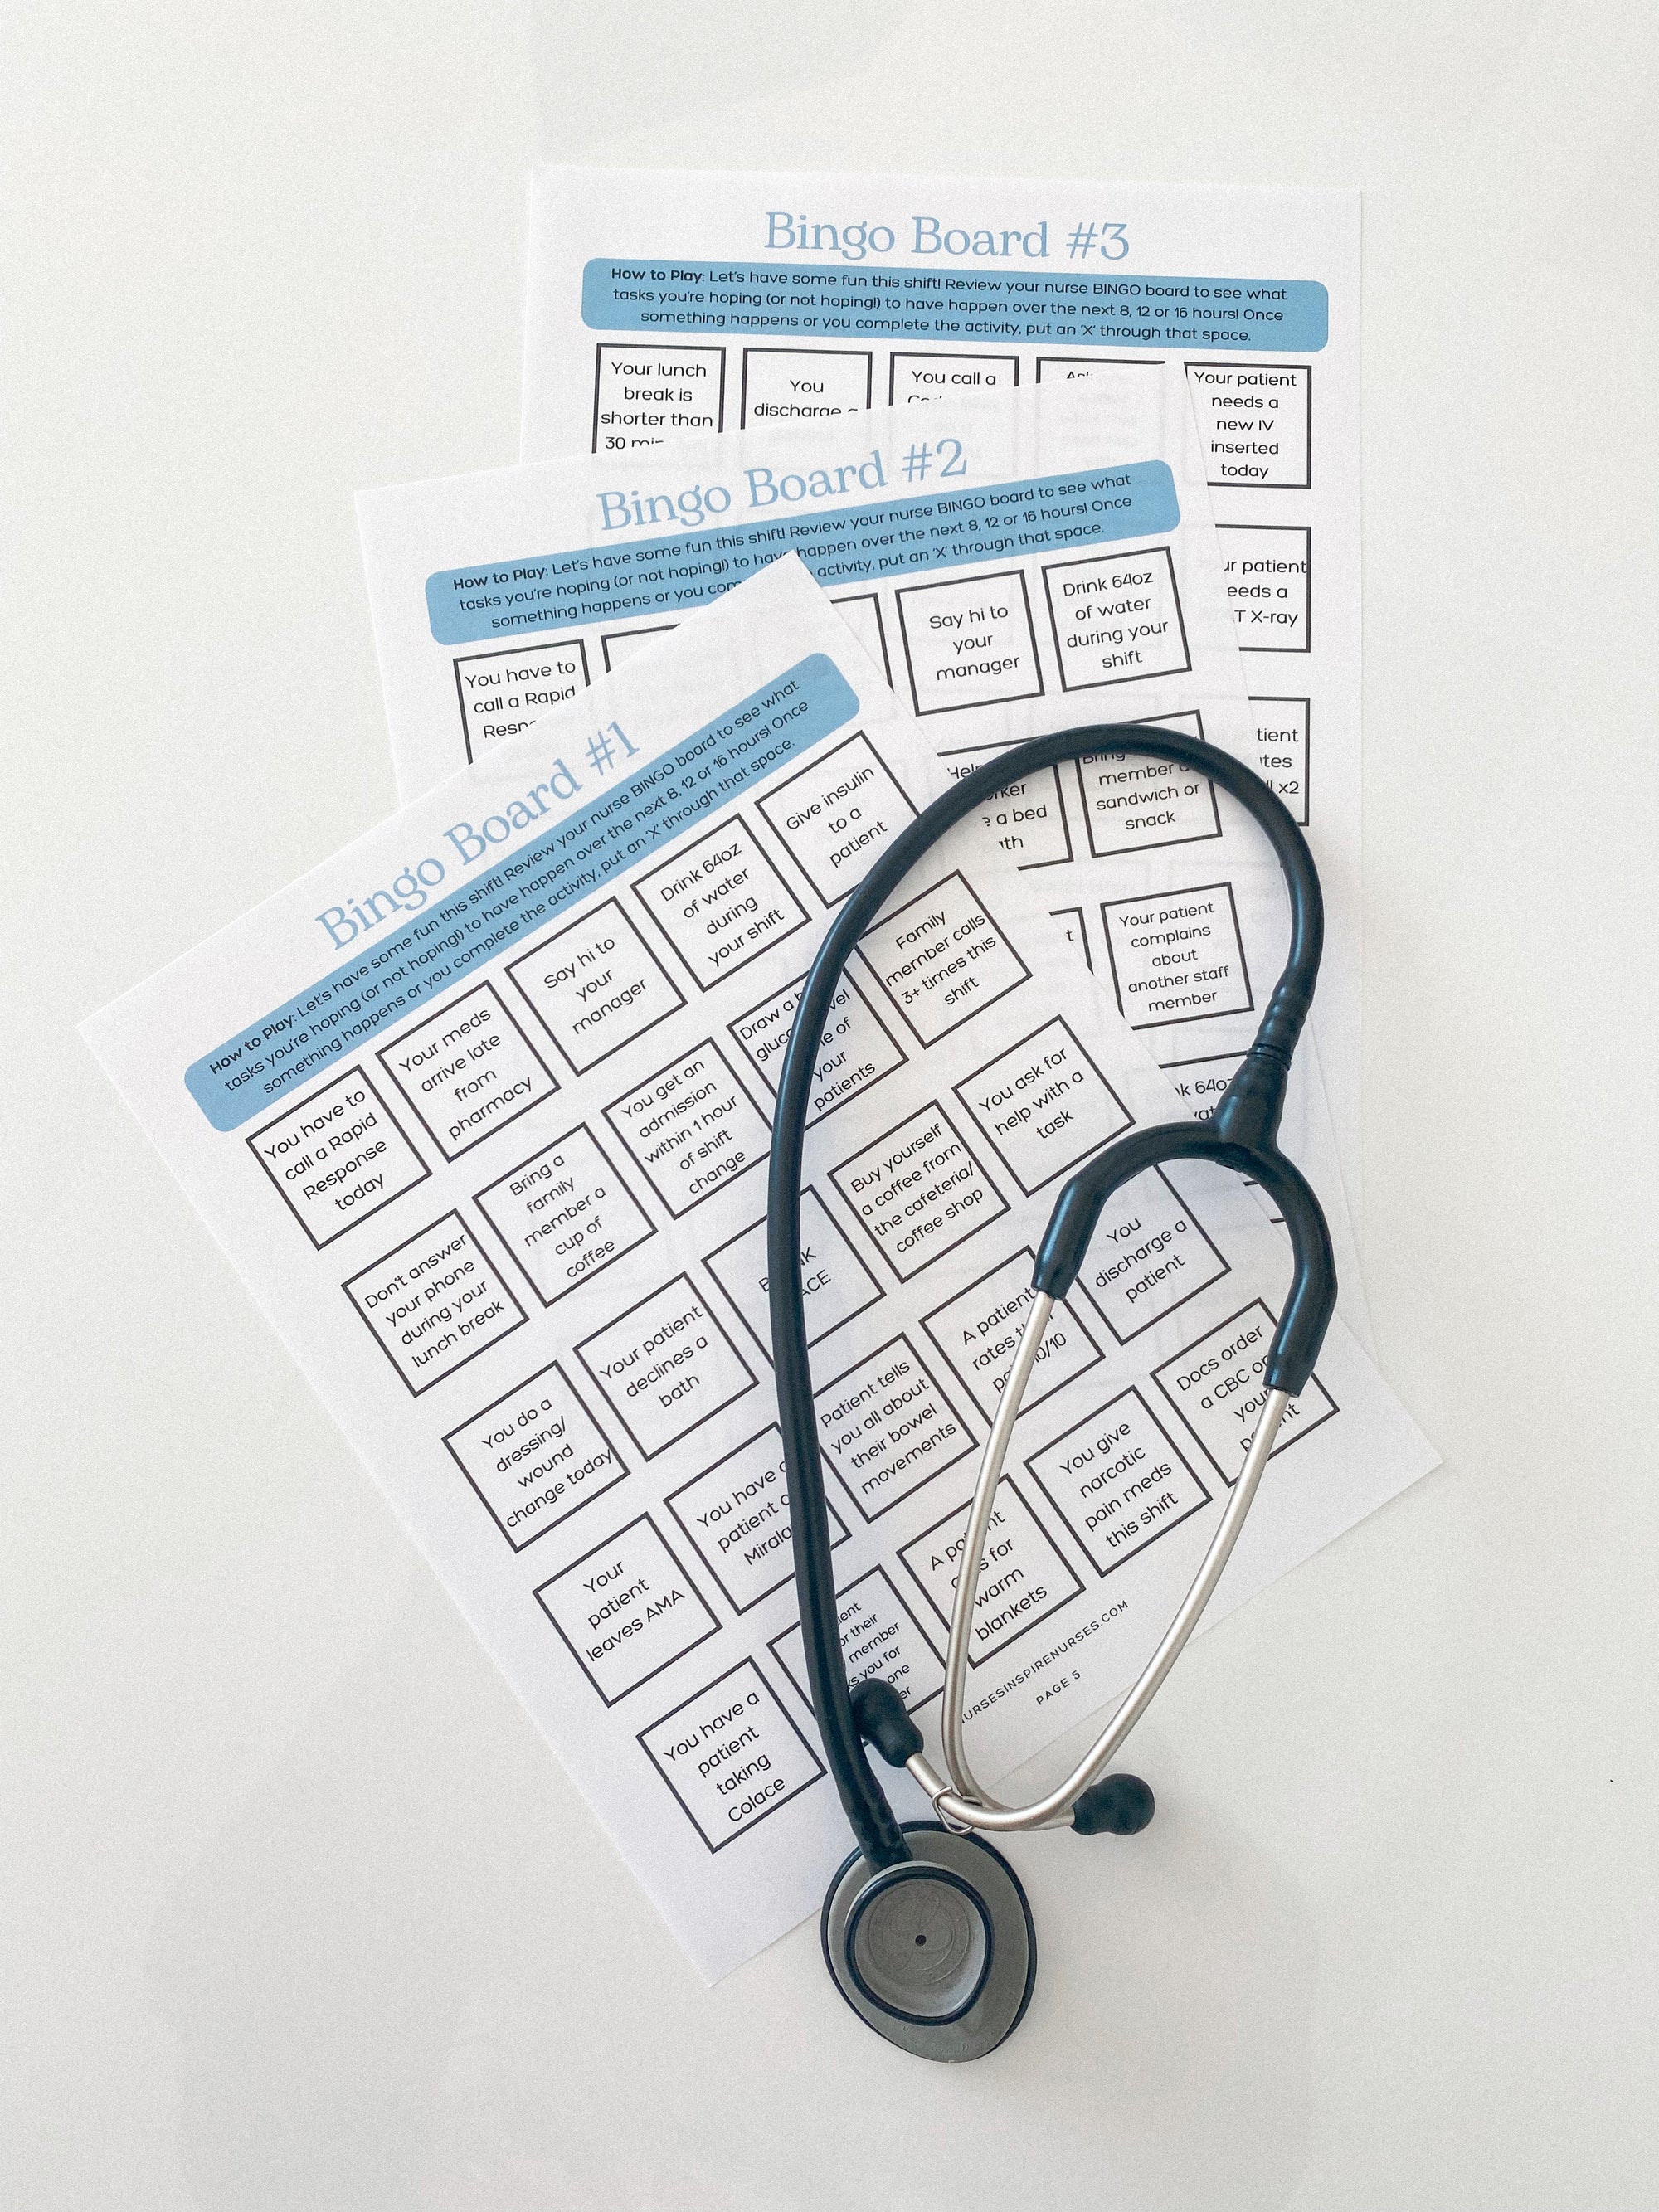 louter campus Ontdek Digital Resource: Nurse Bingo - nursesinspirenurses